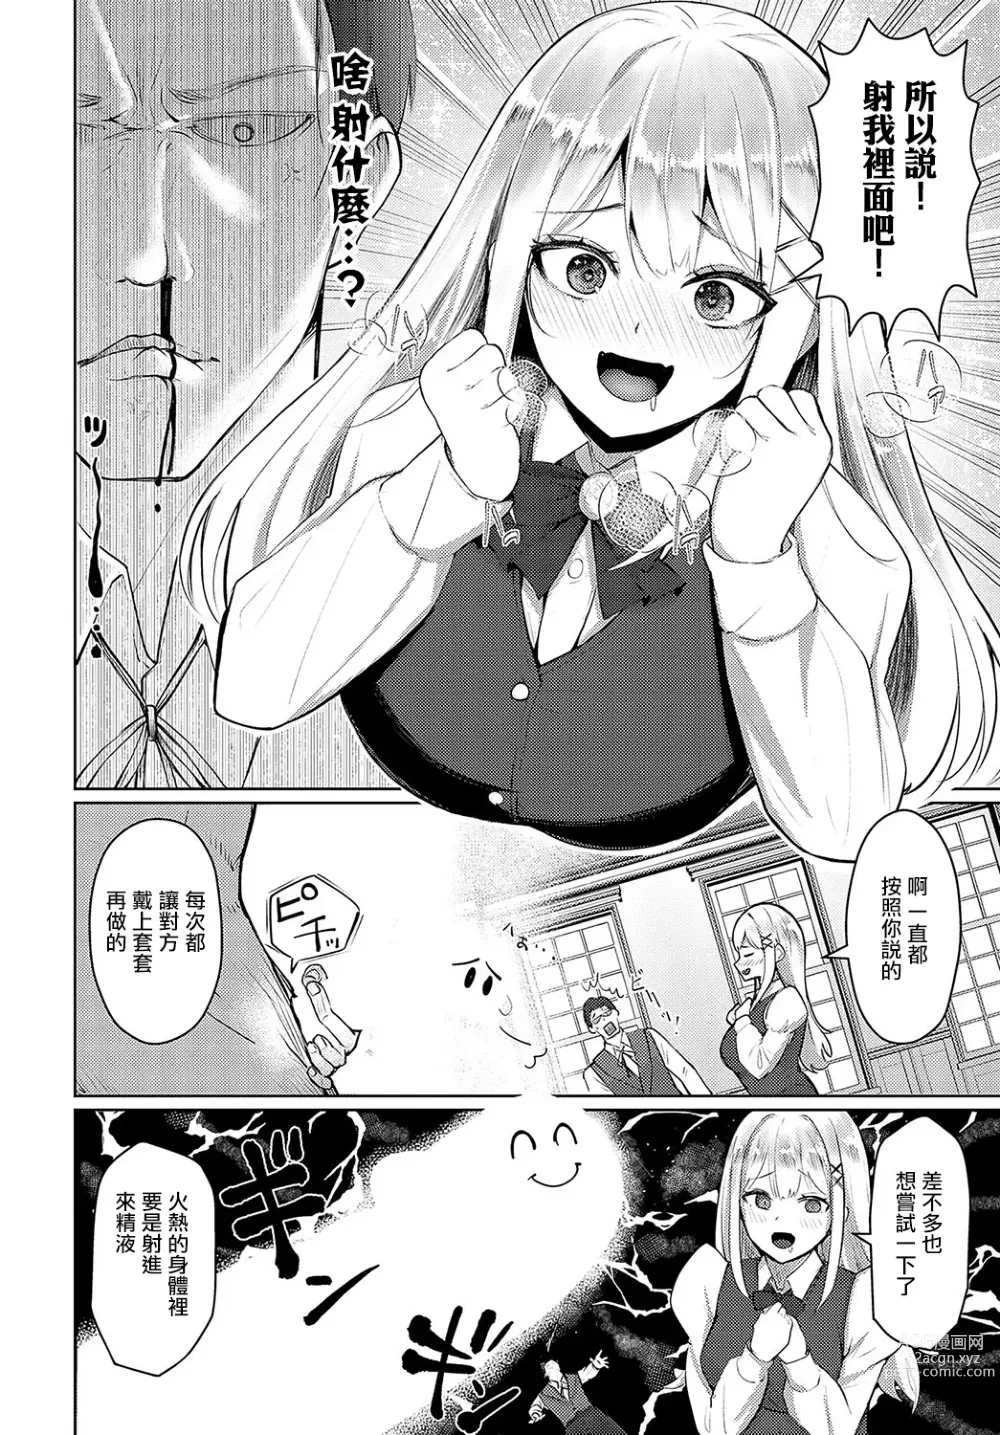 Page 6 of manga Ojou-sama no Oshioki